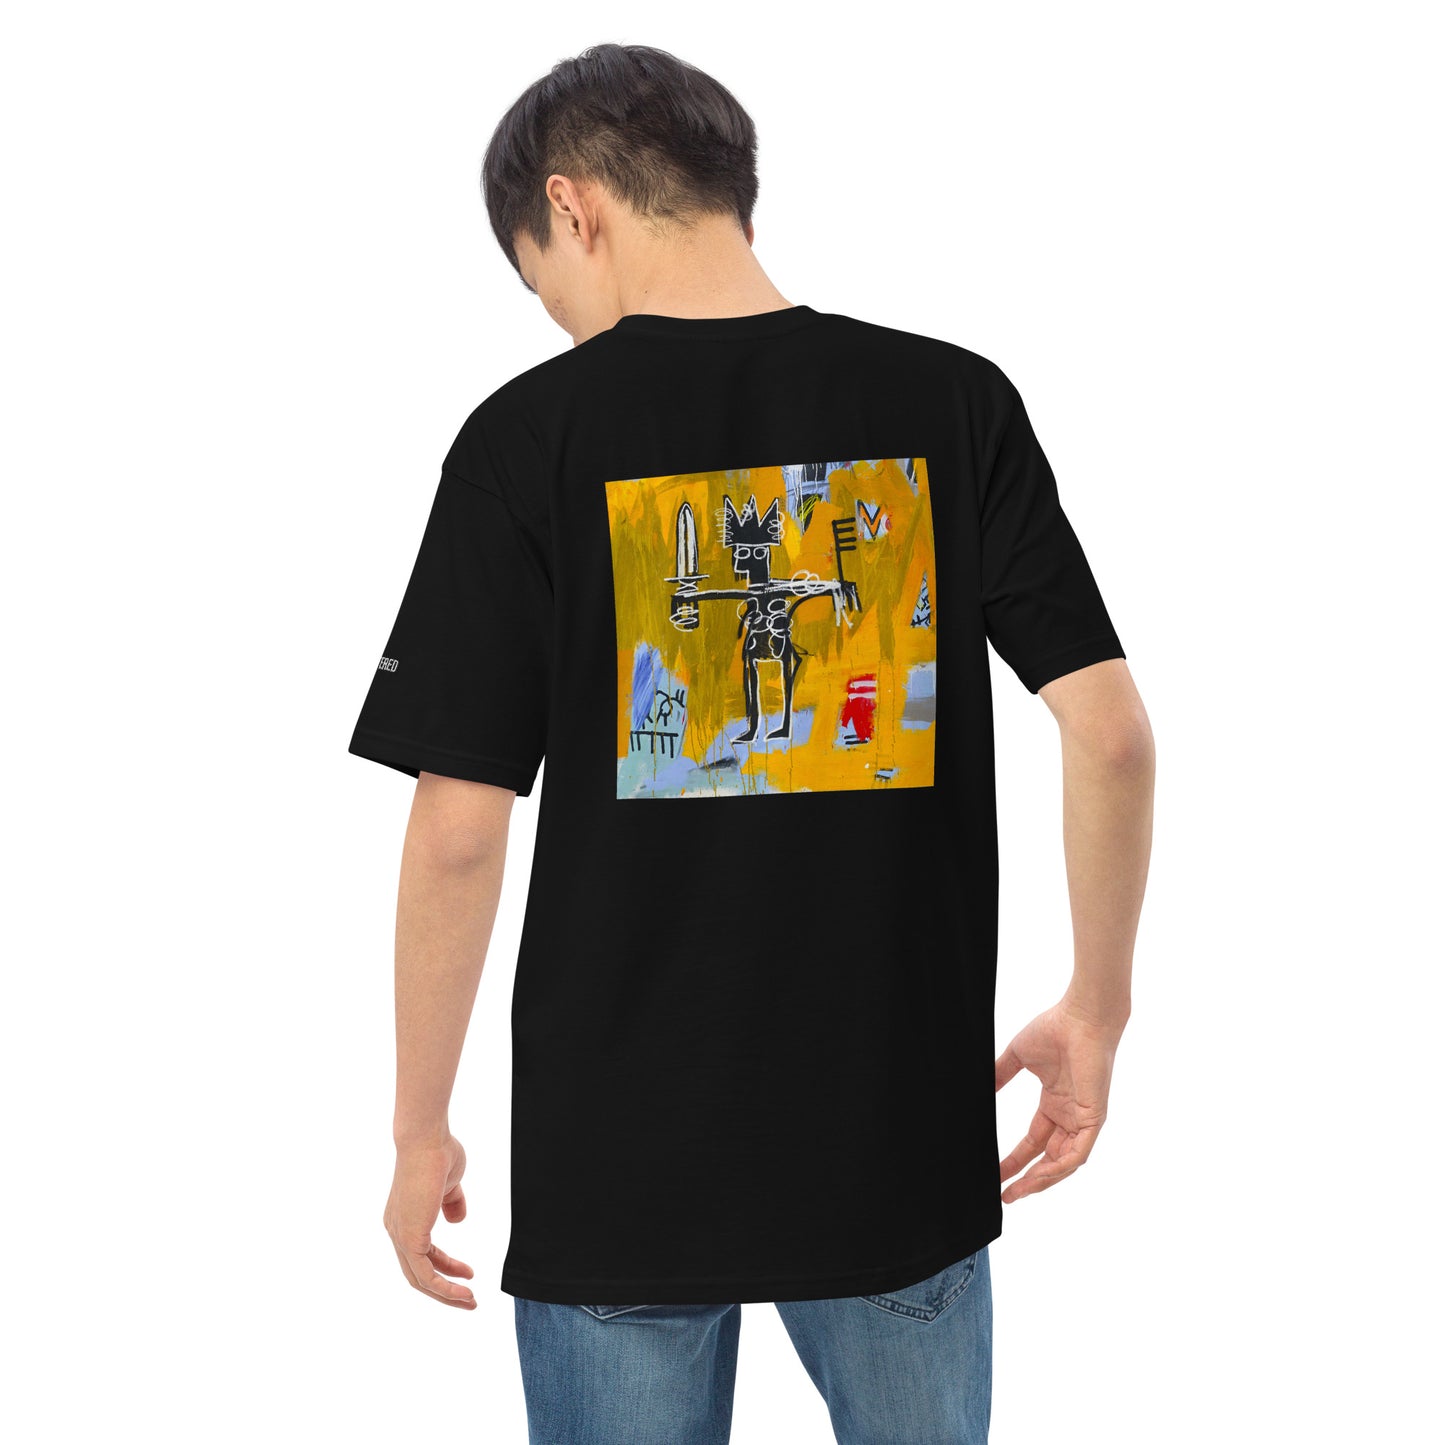 Jean-Michel Basquiat "Julius Caesar on Gold" Artwork Printed Premium Black Streetwear Crewneck T-shirt Scattered 